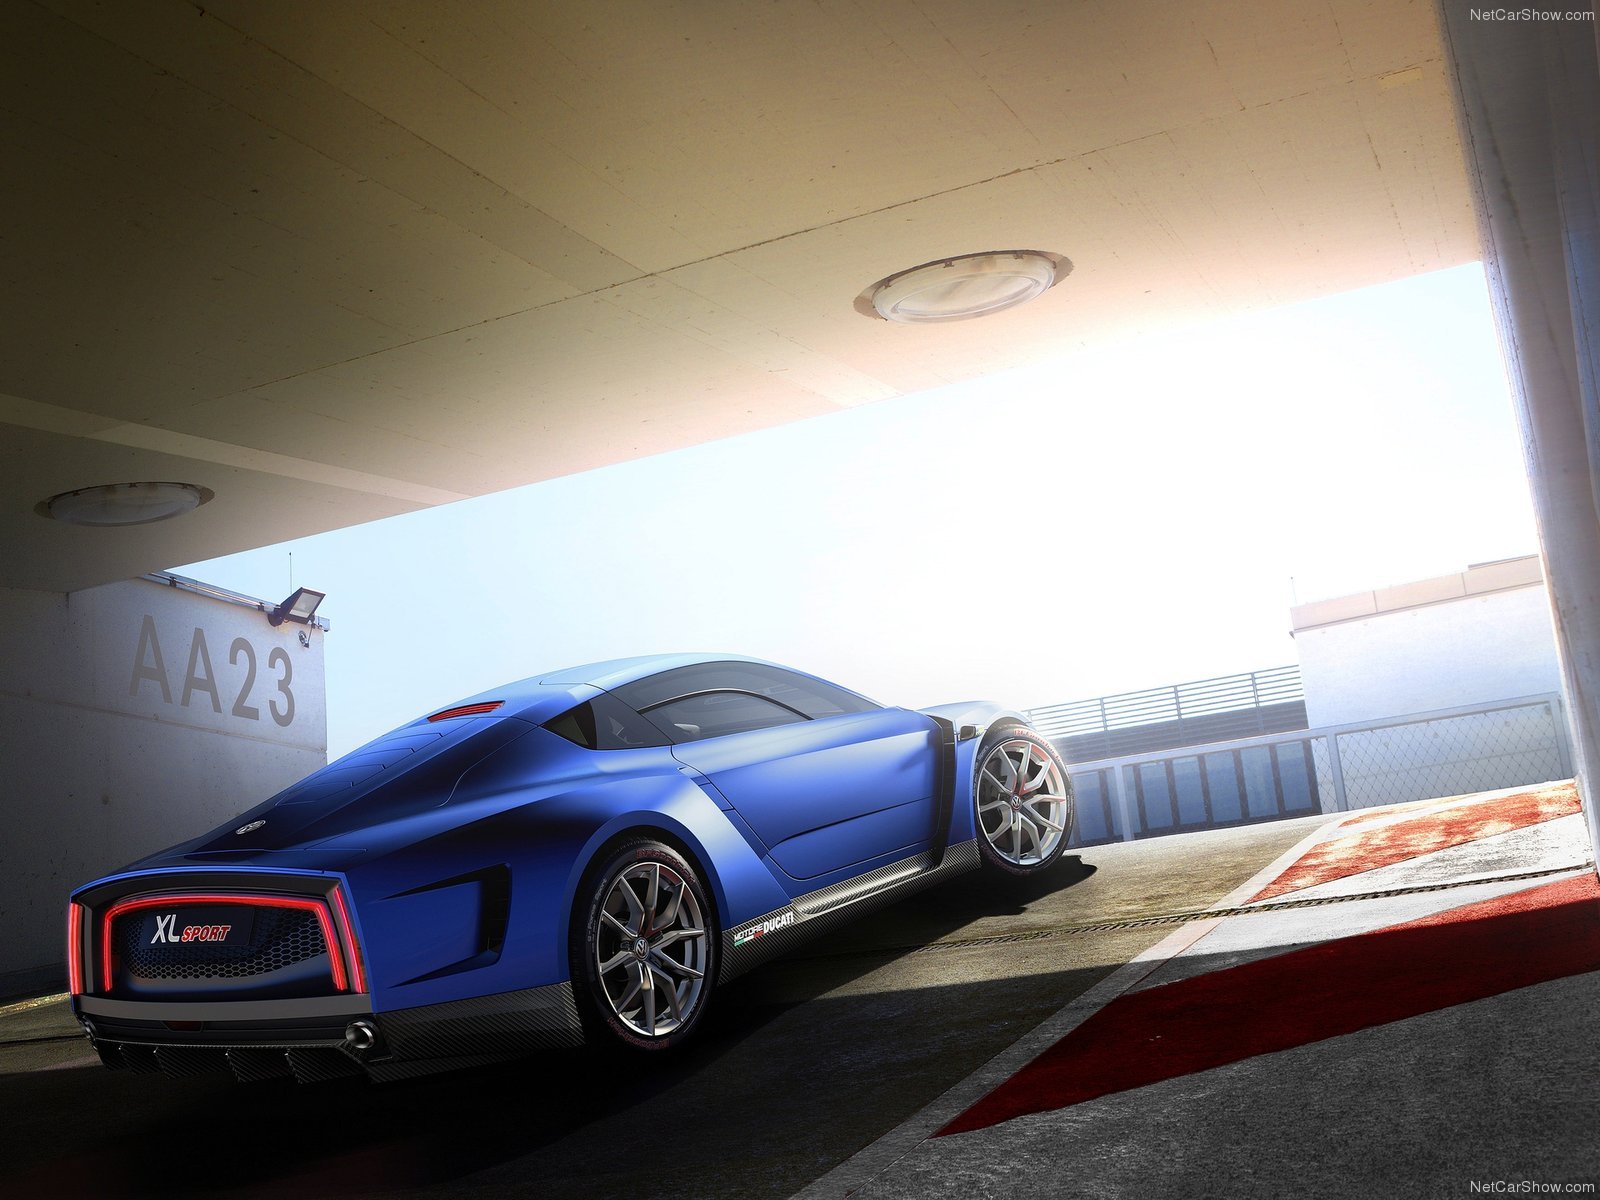 volkswagen, Xl, Sport, Concept, Cars, 2014 Wallpaper